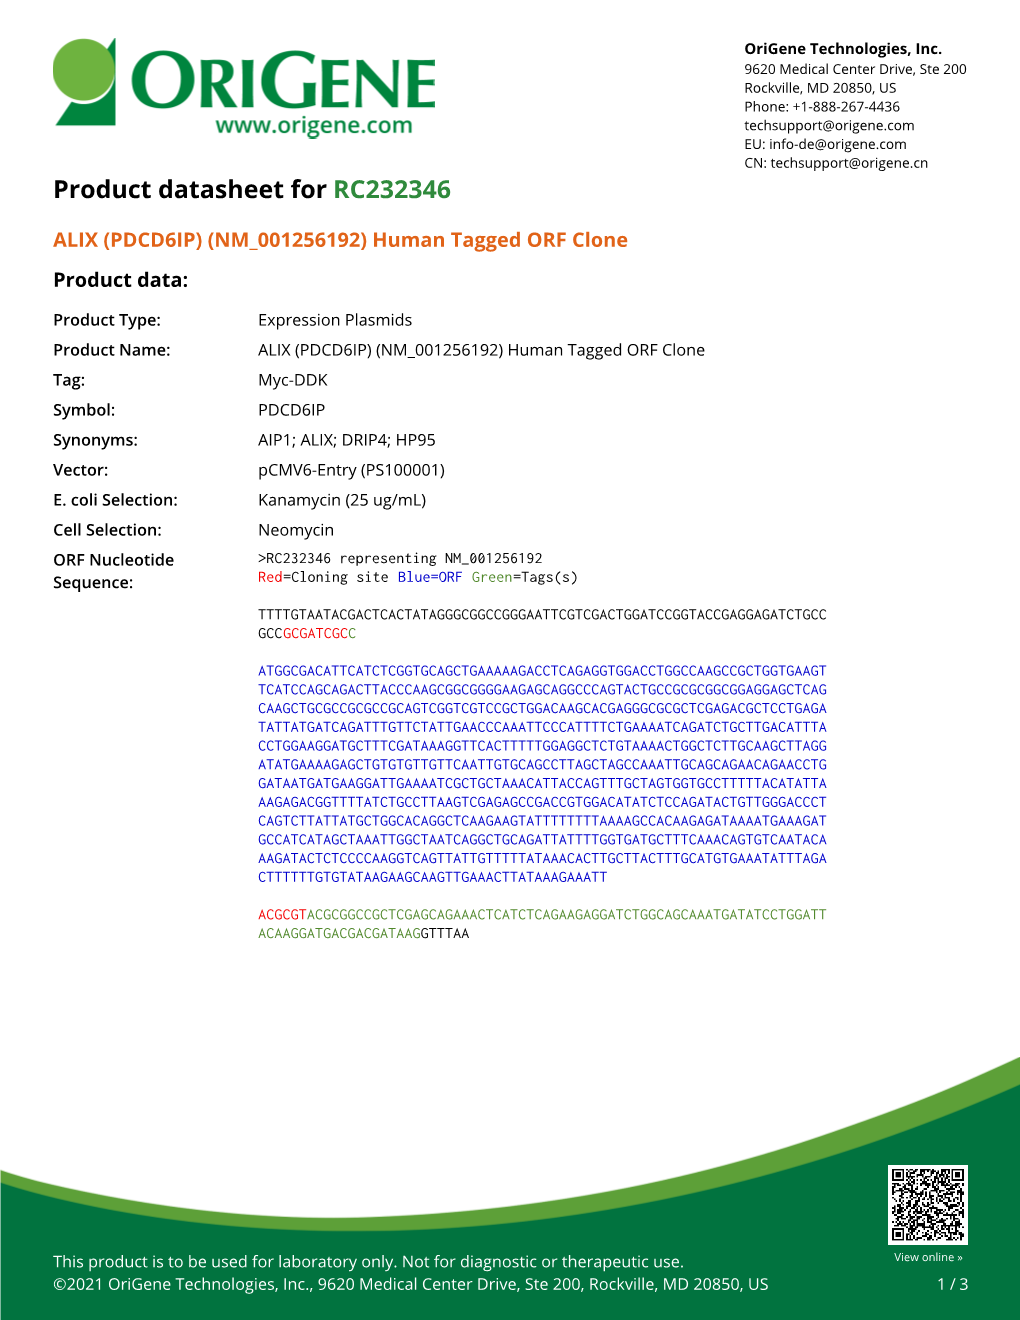 ALIX (PDCD6IP) (NM 001256192) Human Tagged ORF Clone Product Data